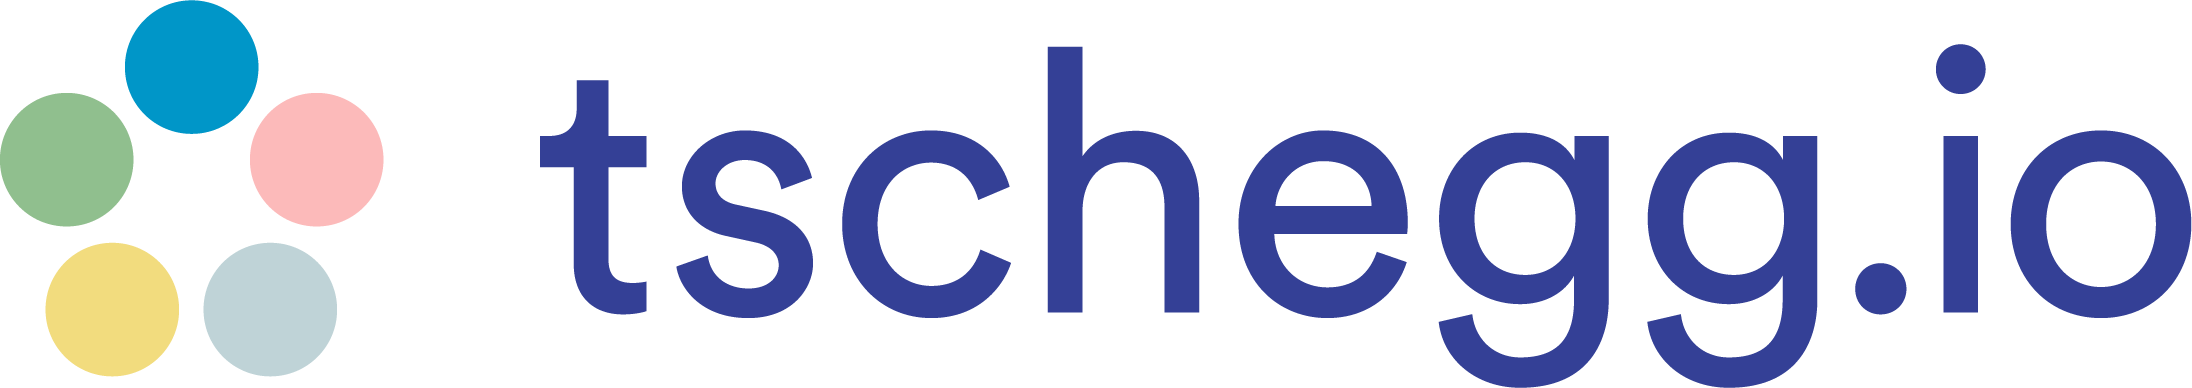 logo_tschegg